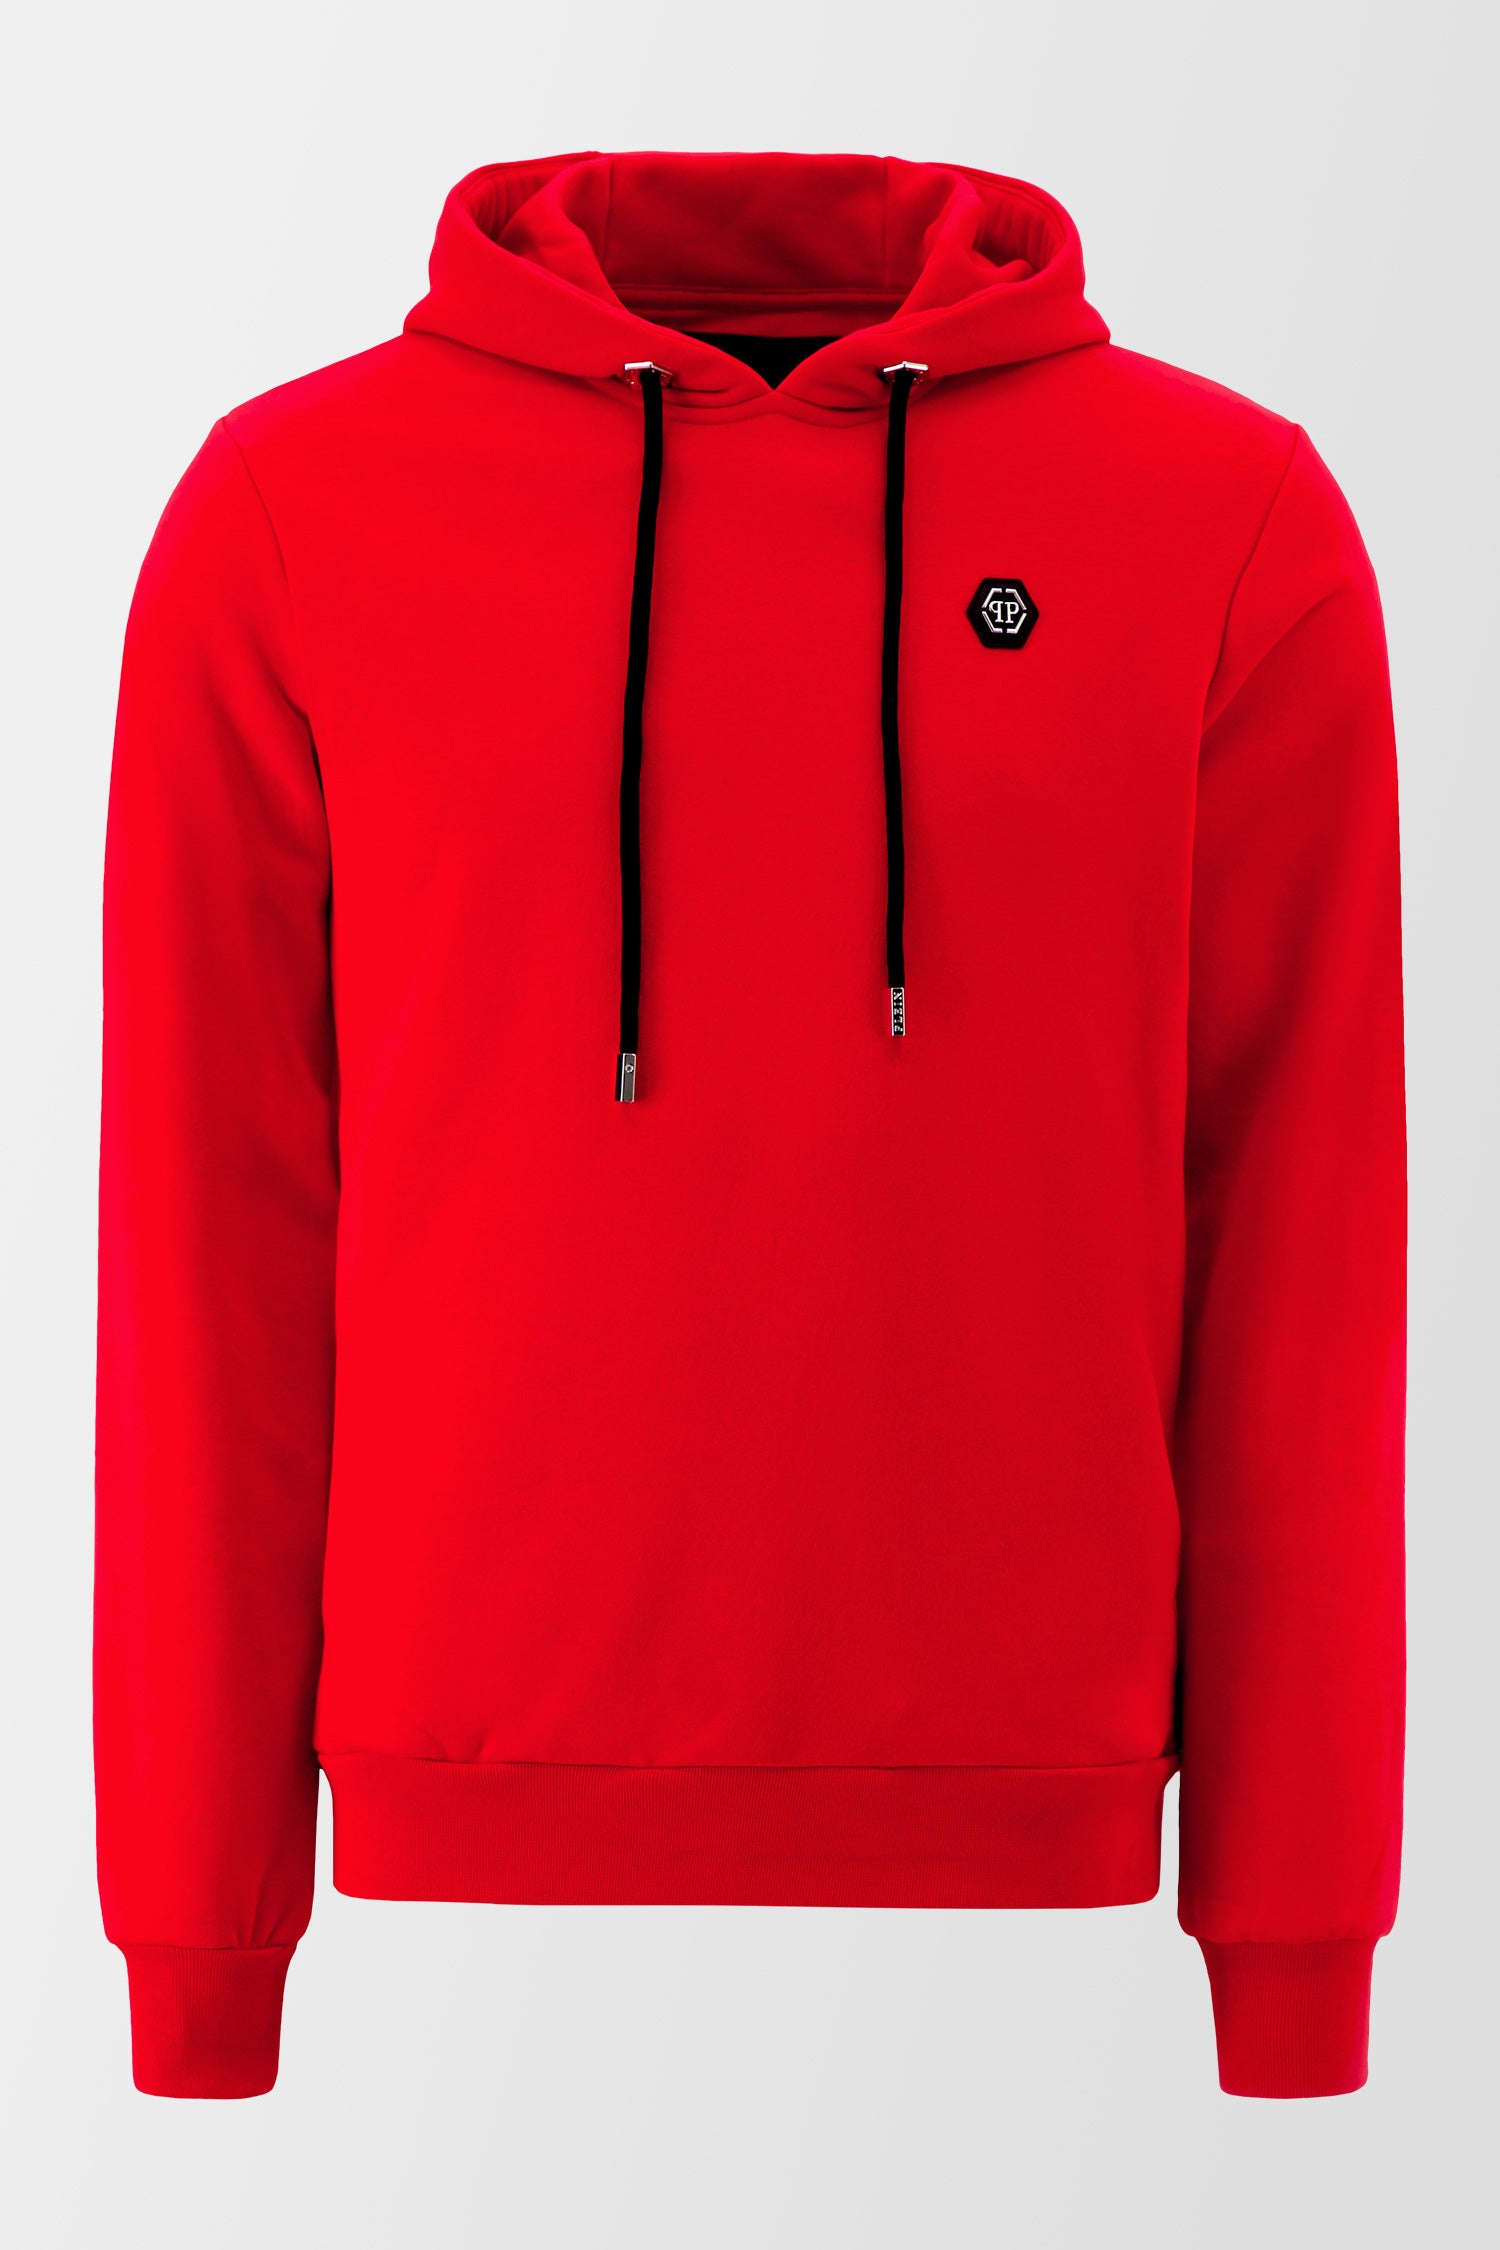 Philipp Plein Institutional Red Hoodie Sweatshirt